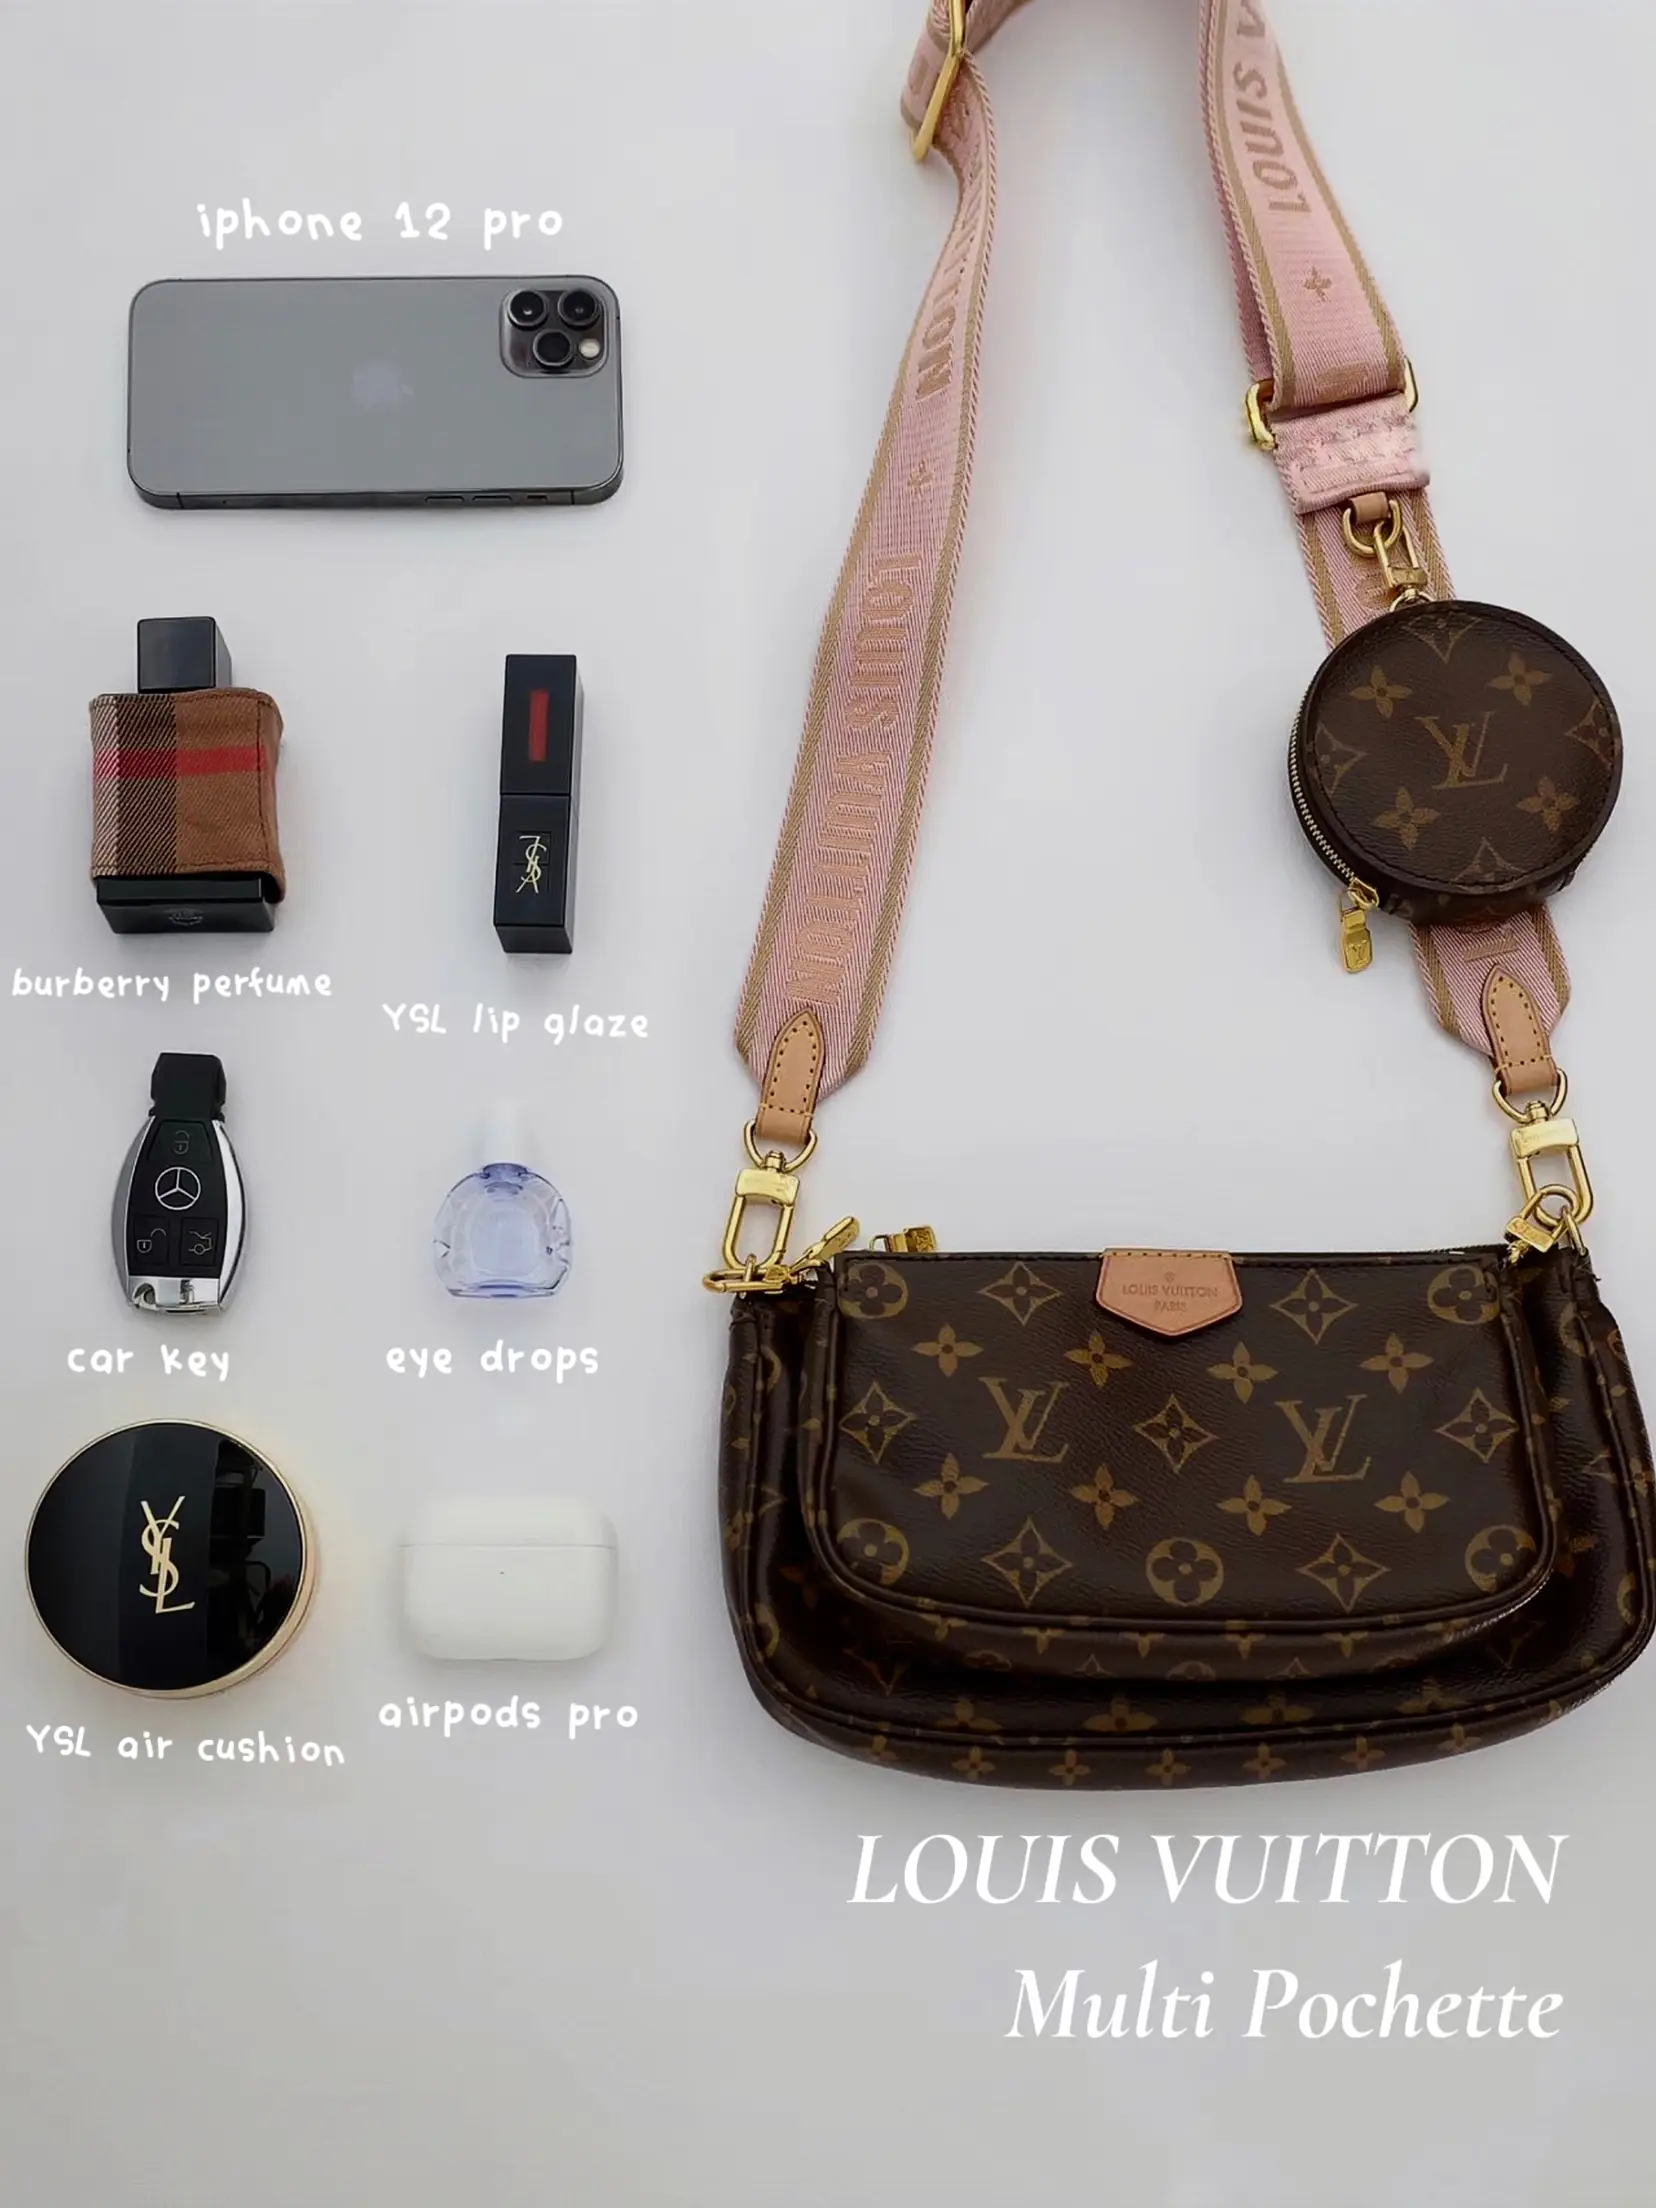 Dhgate Louis Vuitton Multi Pochette Accessories